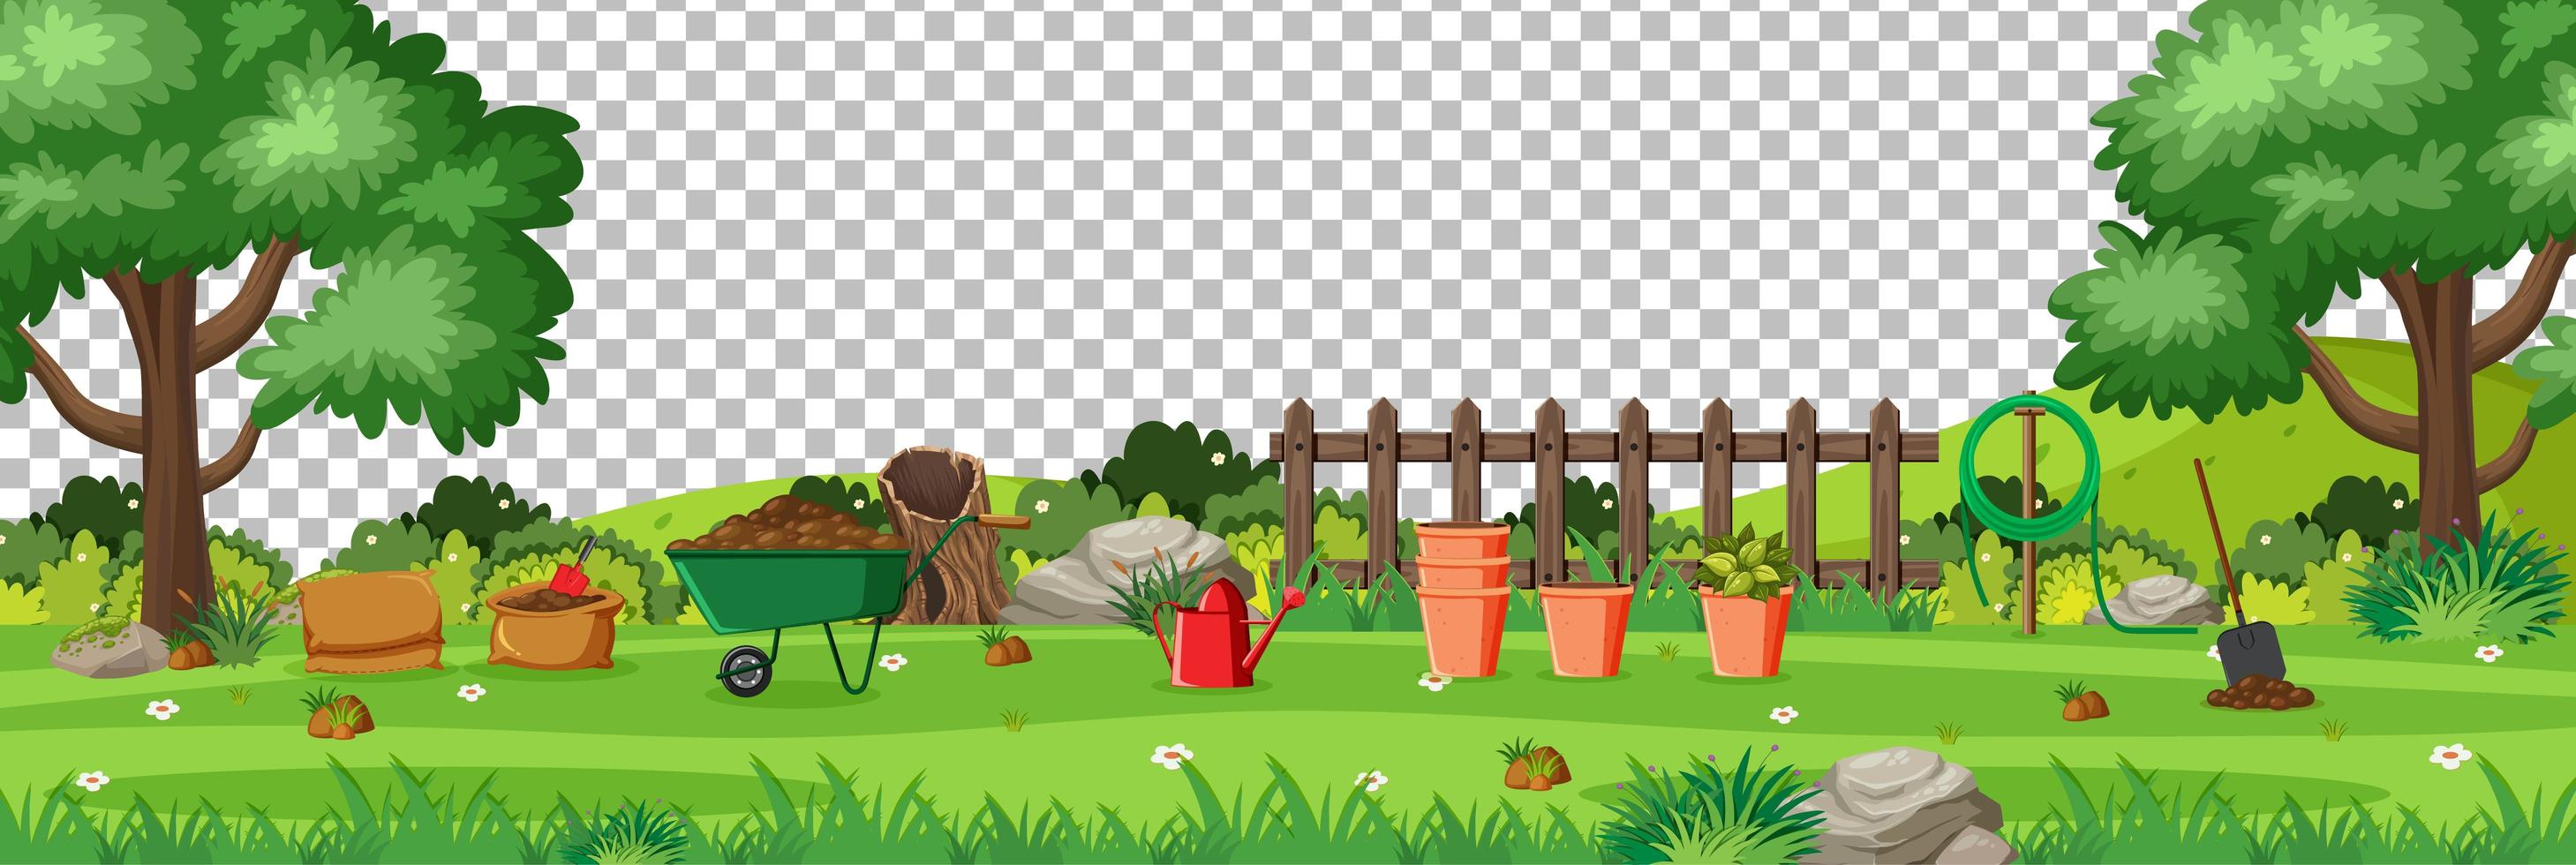 Blank nature garden with garden tools scene landscape on transparent background vector